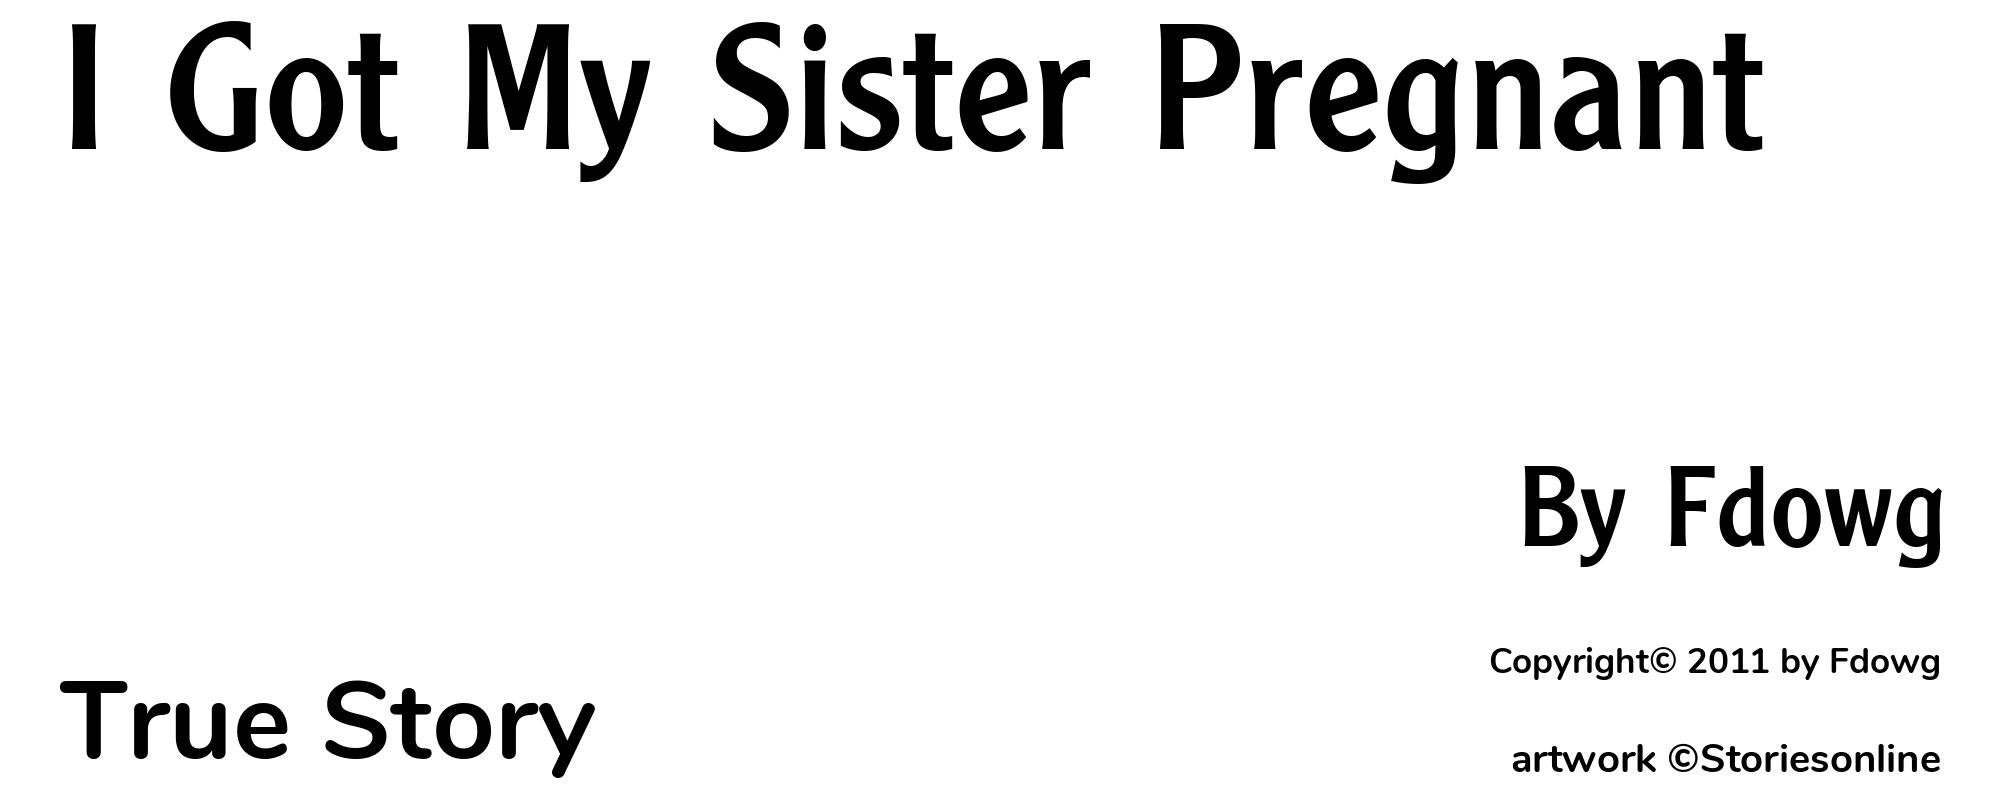 I Got My Sister Pregnant - Cover